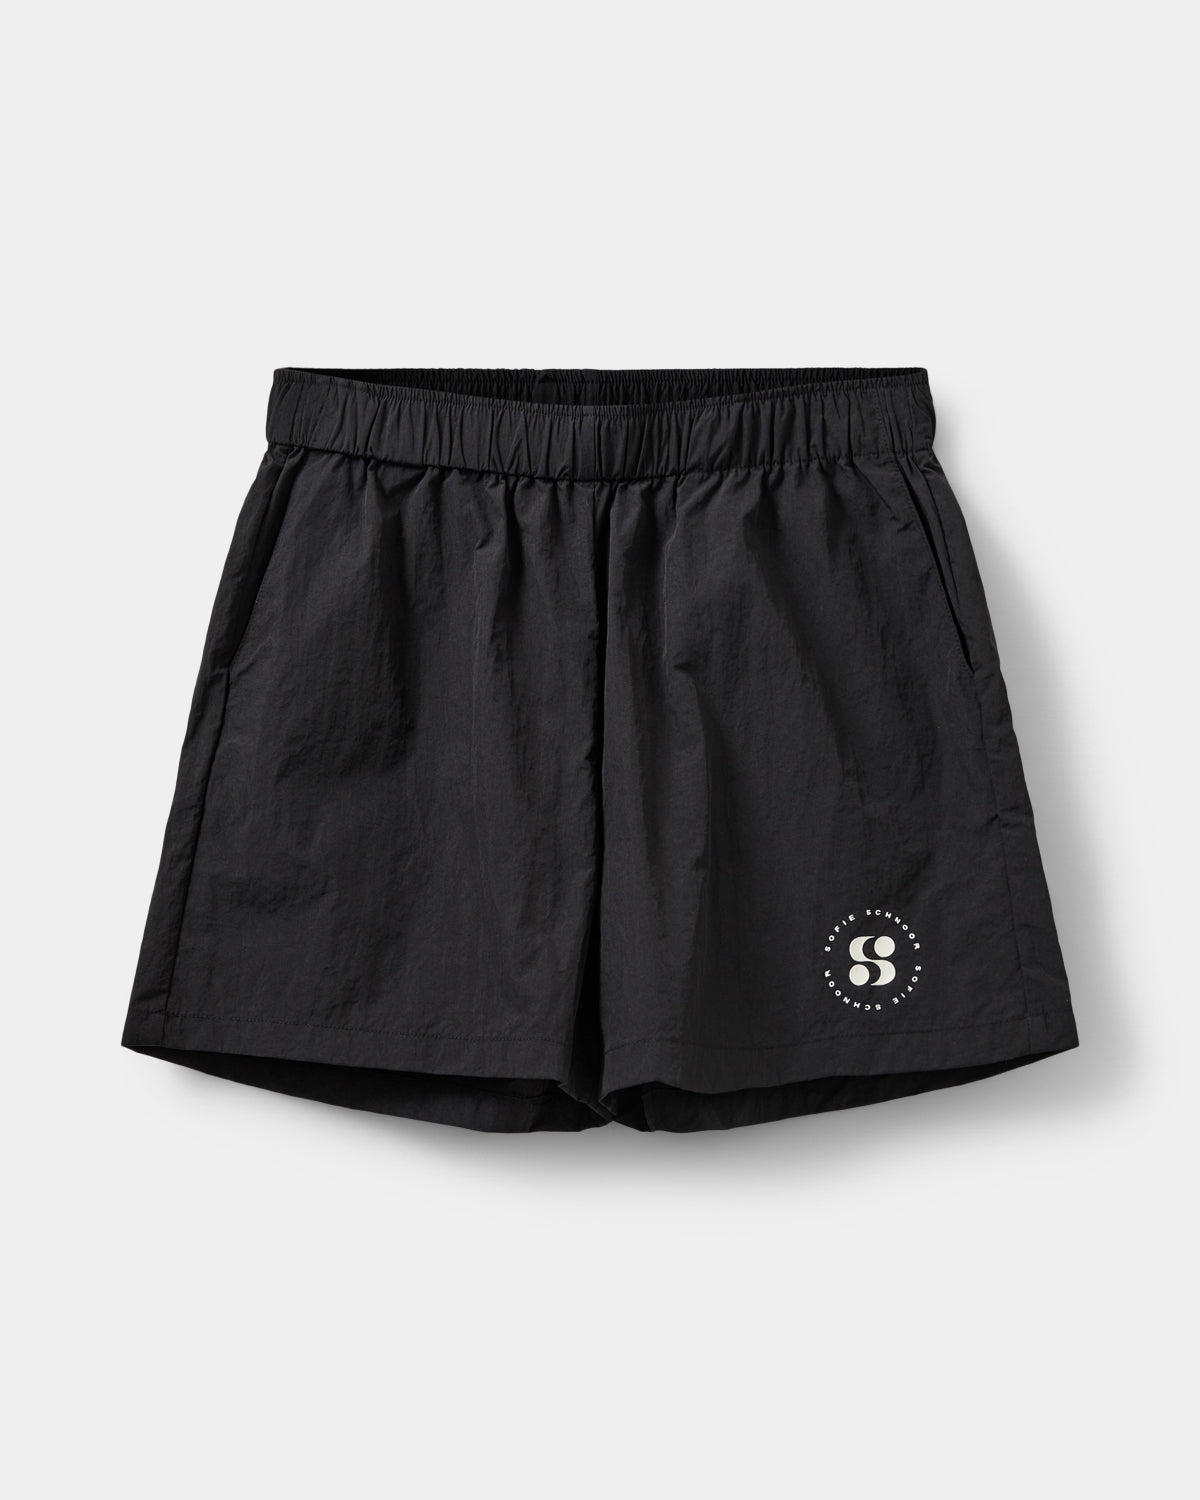 SNOS410-Shorts-Black